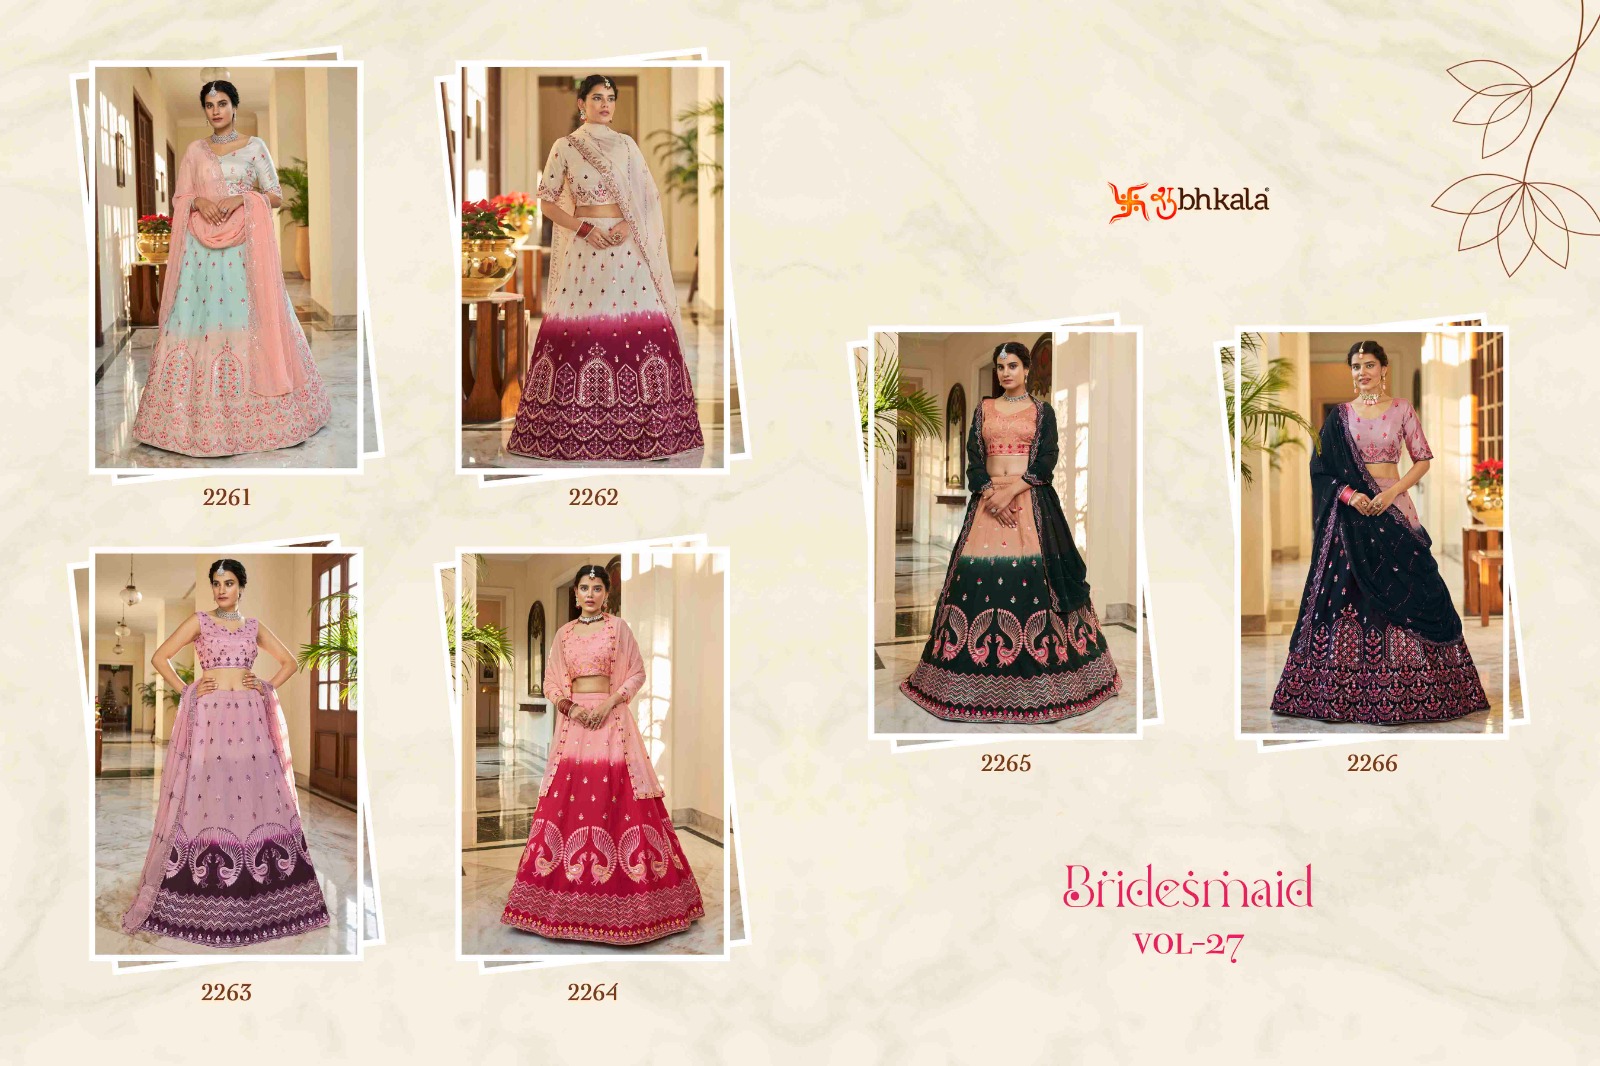 Shubhkala Bridesmaid 2261-2266